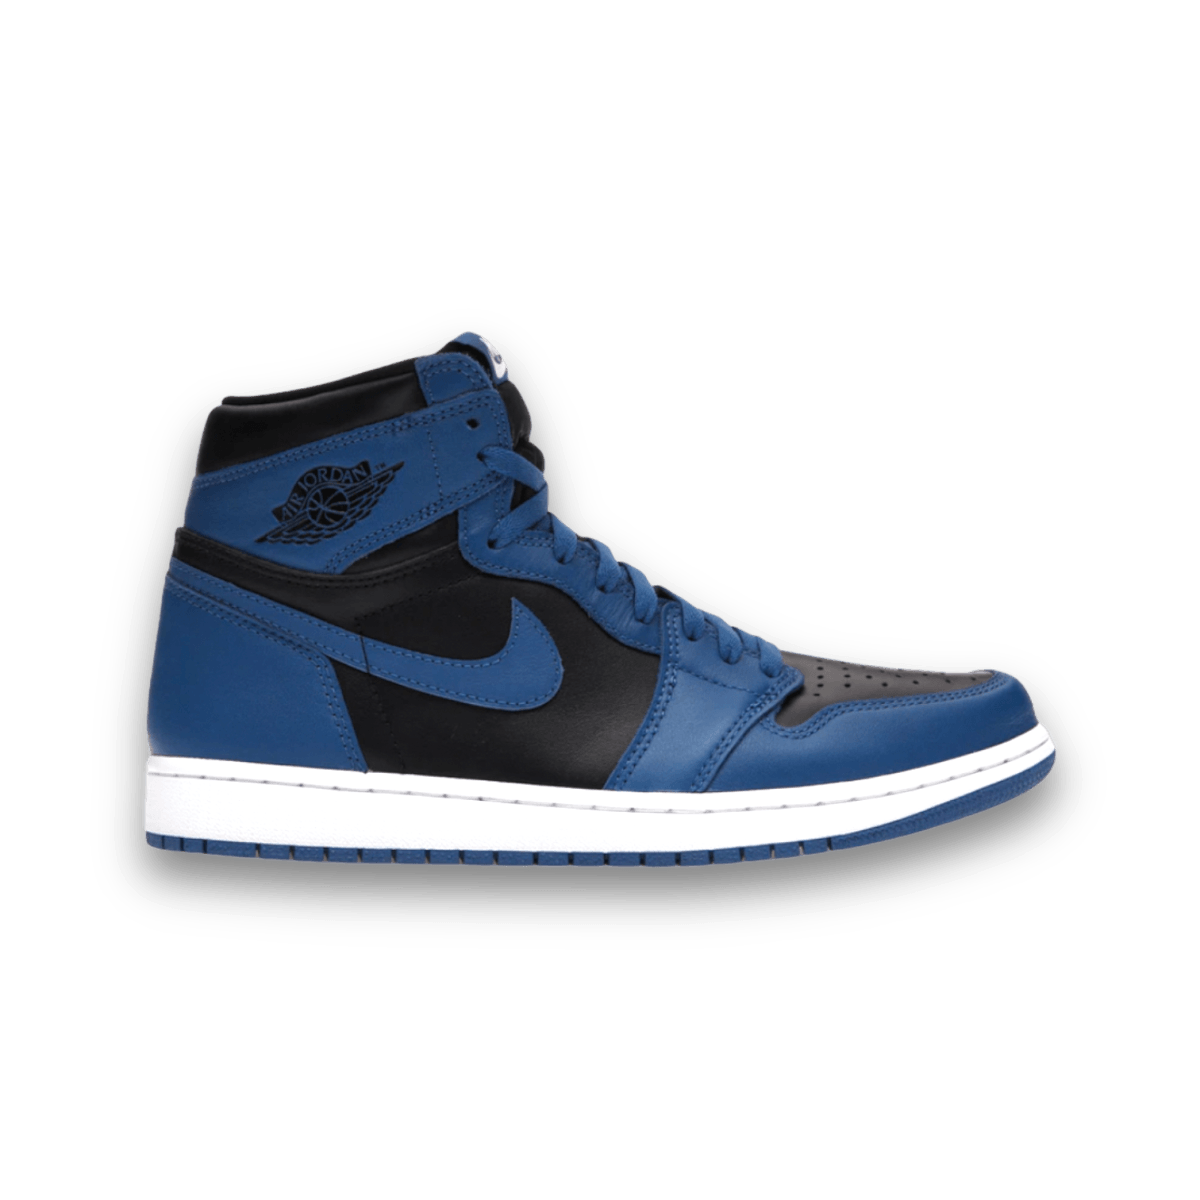 Jordan 1 Retro High OG Dark Marina Blue - High Sneaker - Jordan - Jawns on Fire